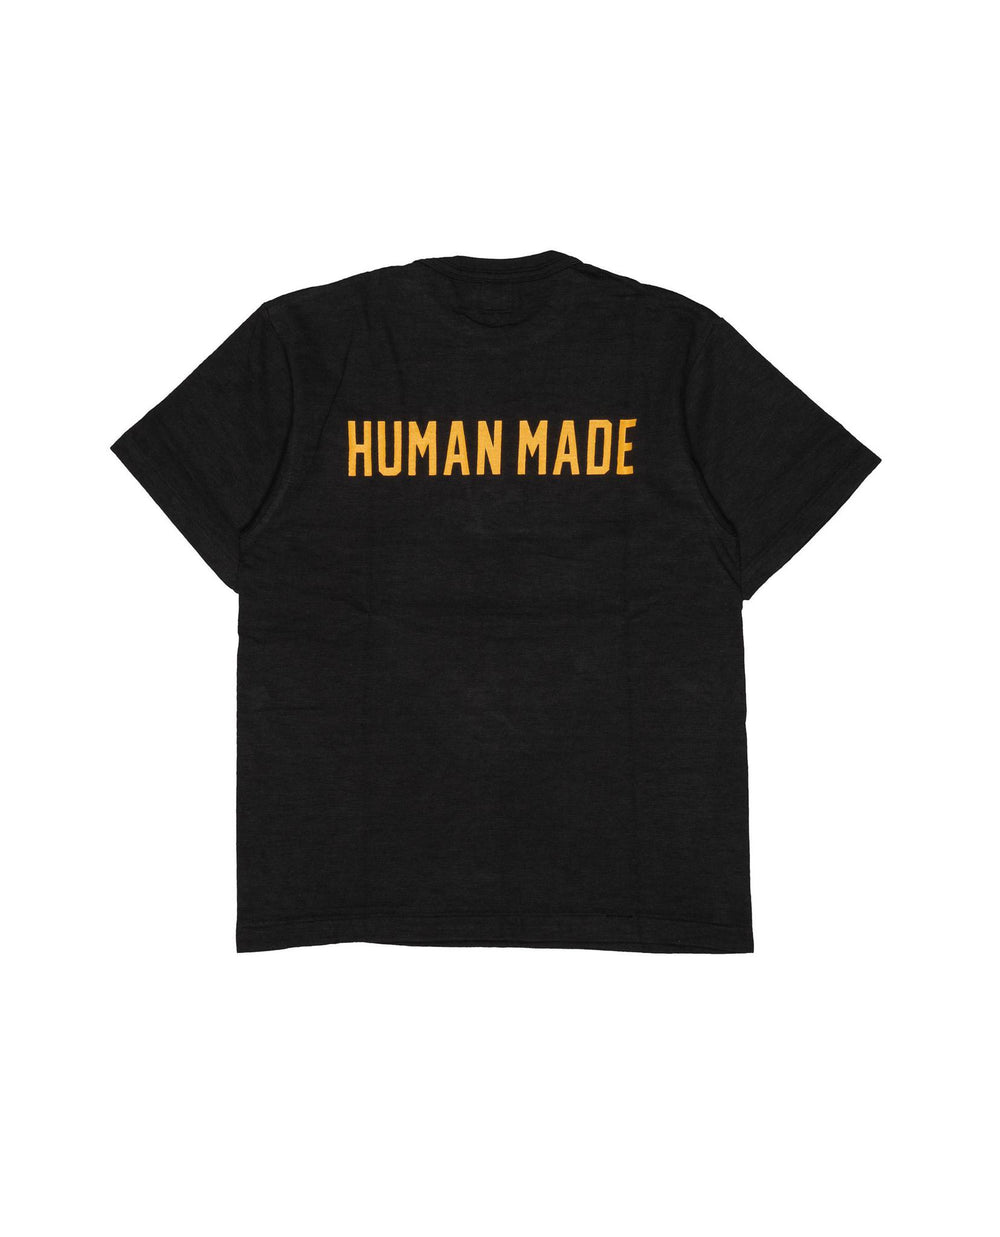 Human Made T-Shirt #04 | STASHED